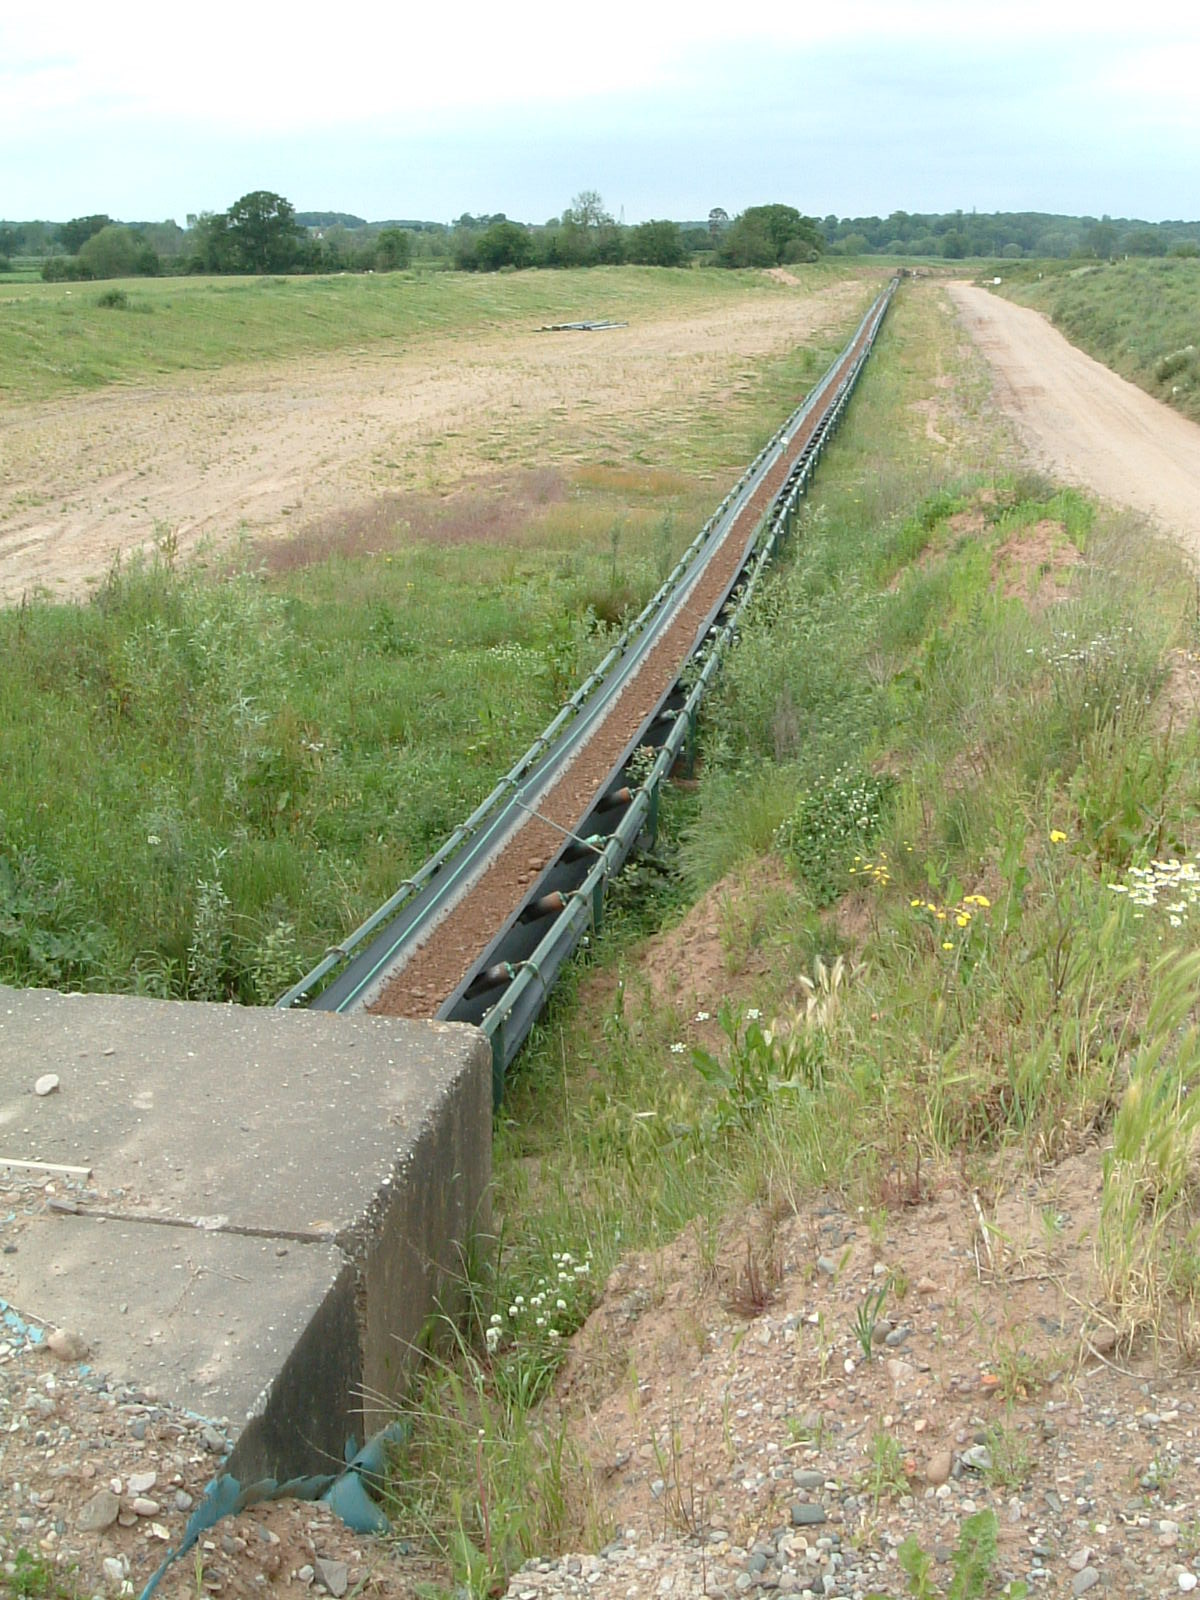 A conveyor belt in a quarry